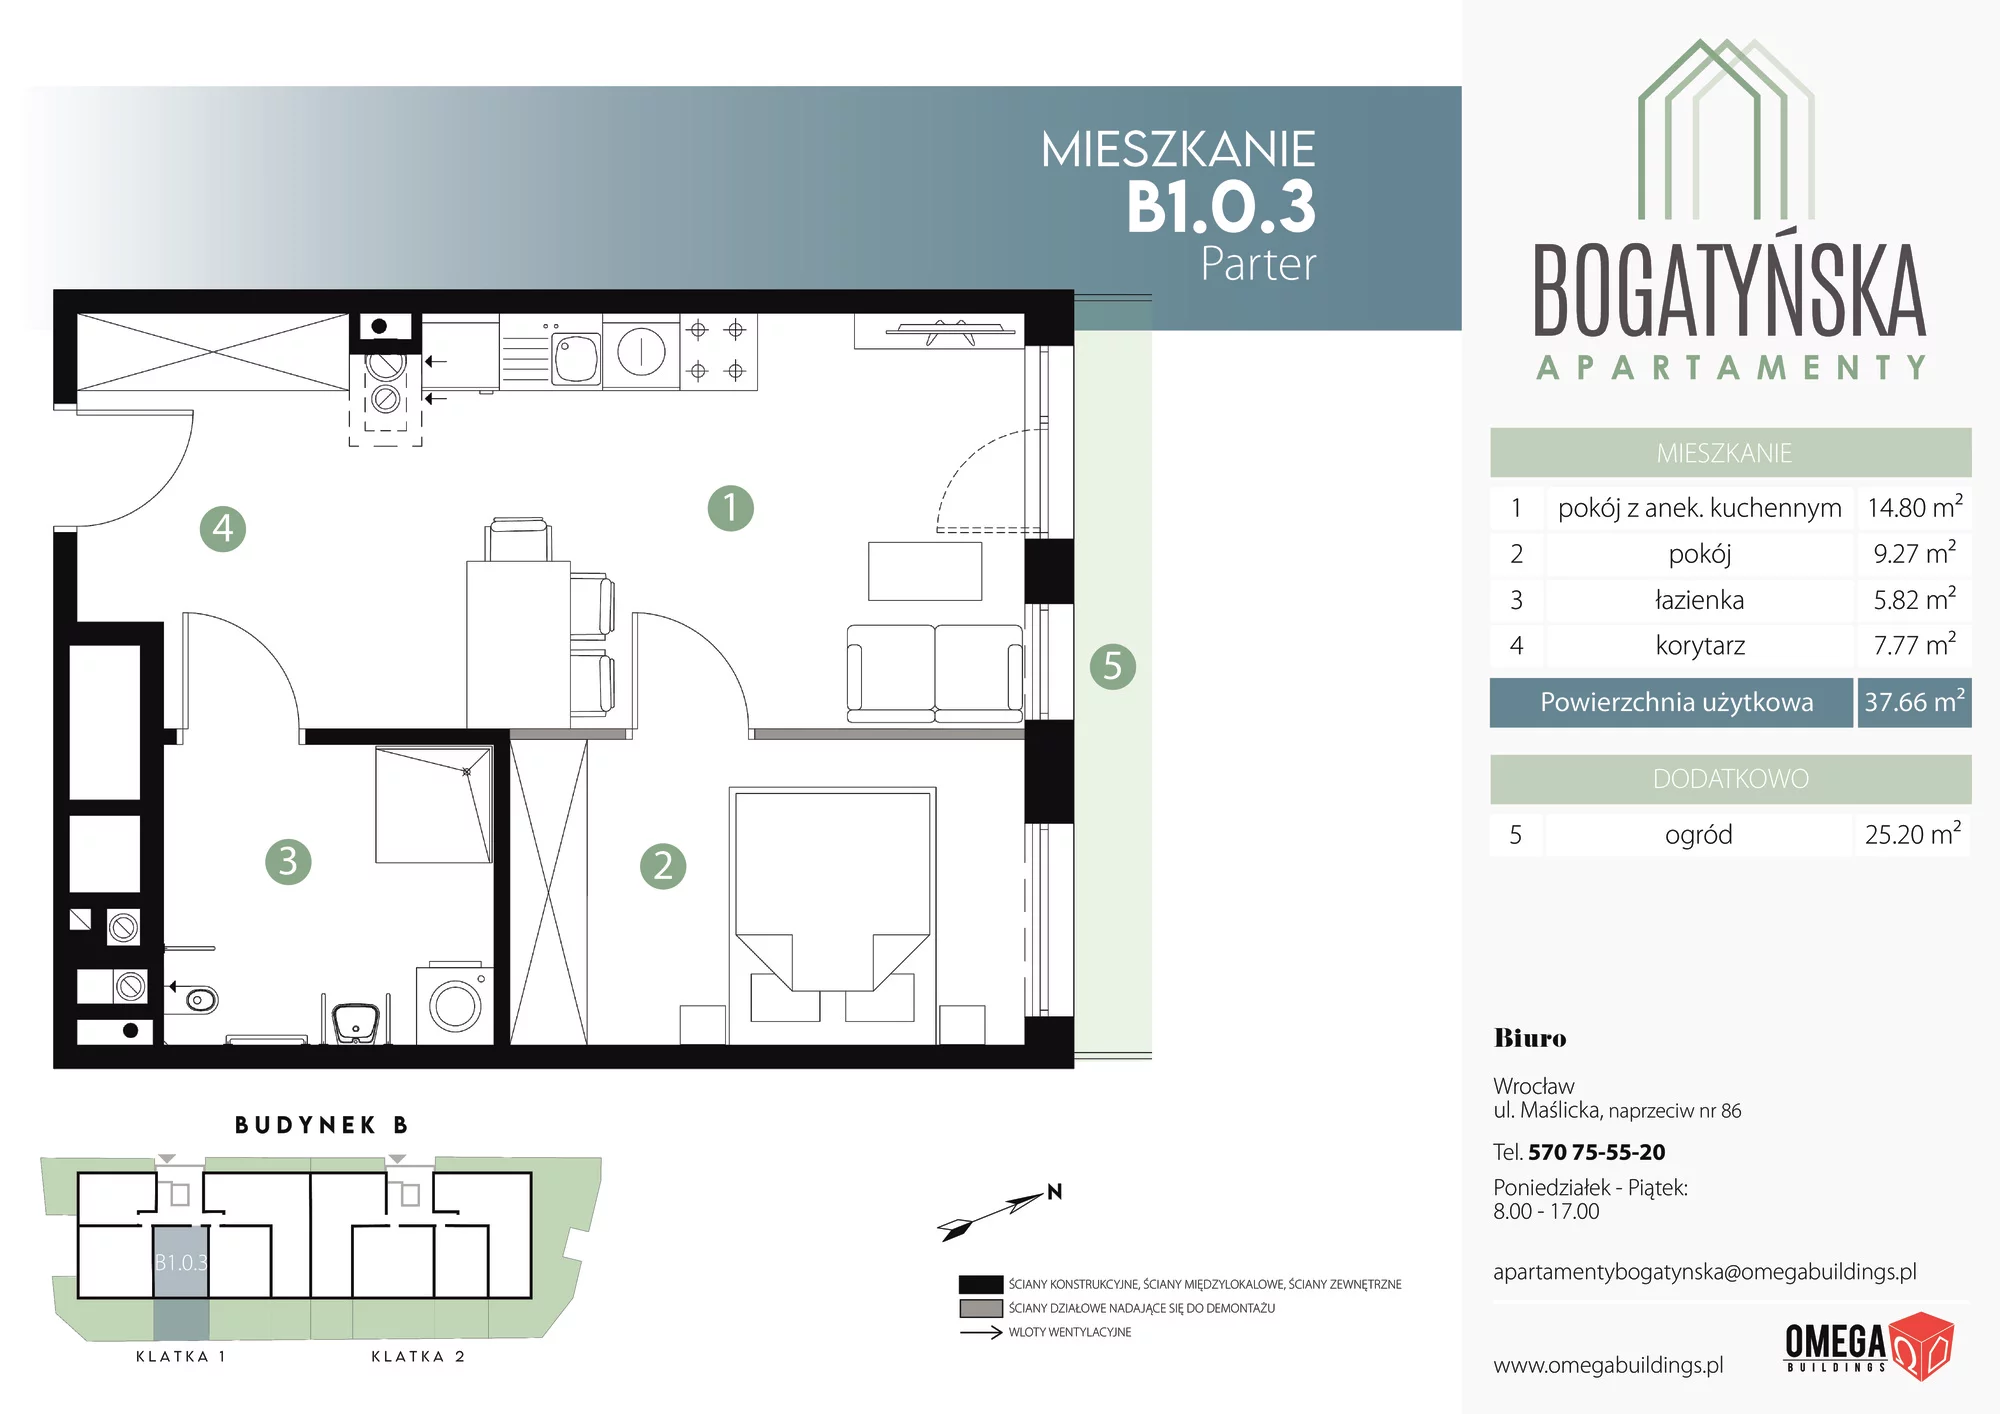 Apartament 37,66 m², parter, oferta nr B1.0.3, Bogatyńska Apartamenty, Wrocław, Maślice, Fabryczna, ul. Bogatyńska